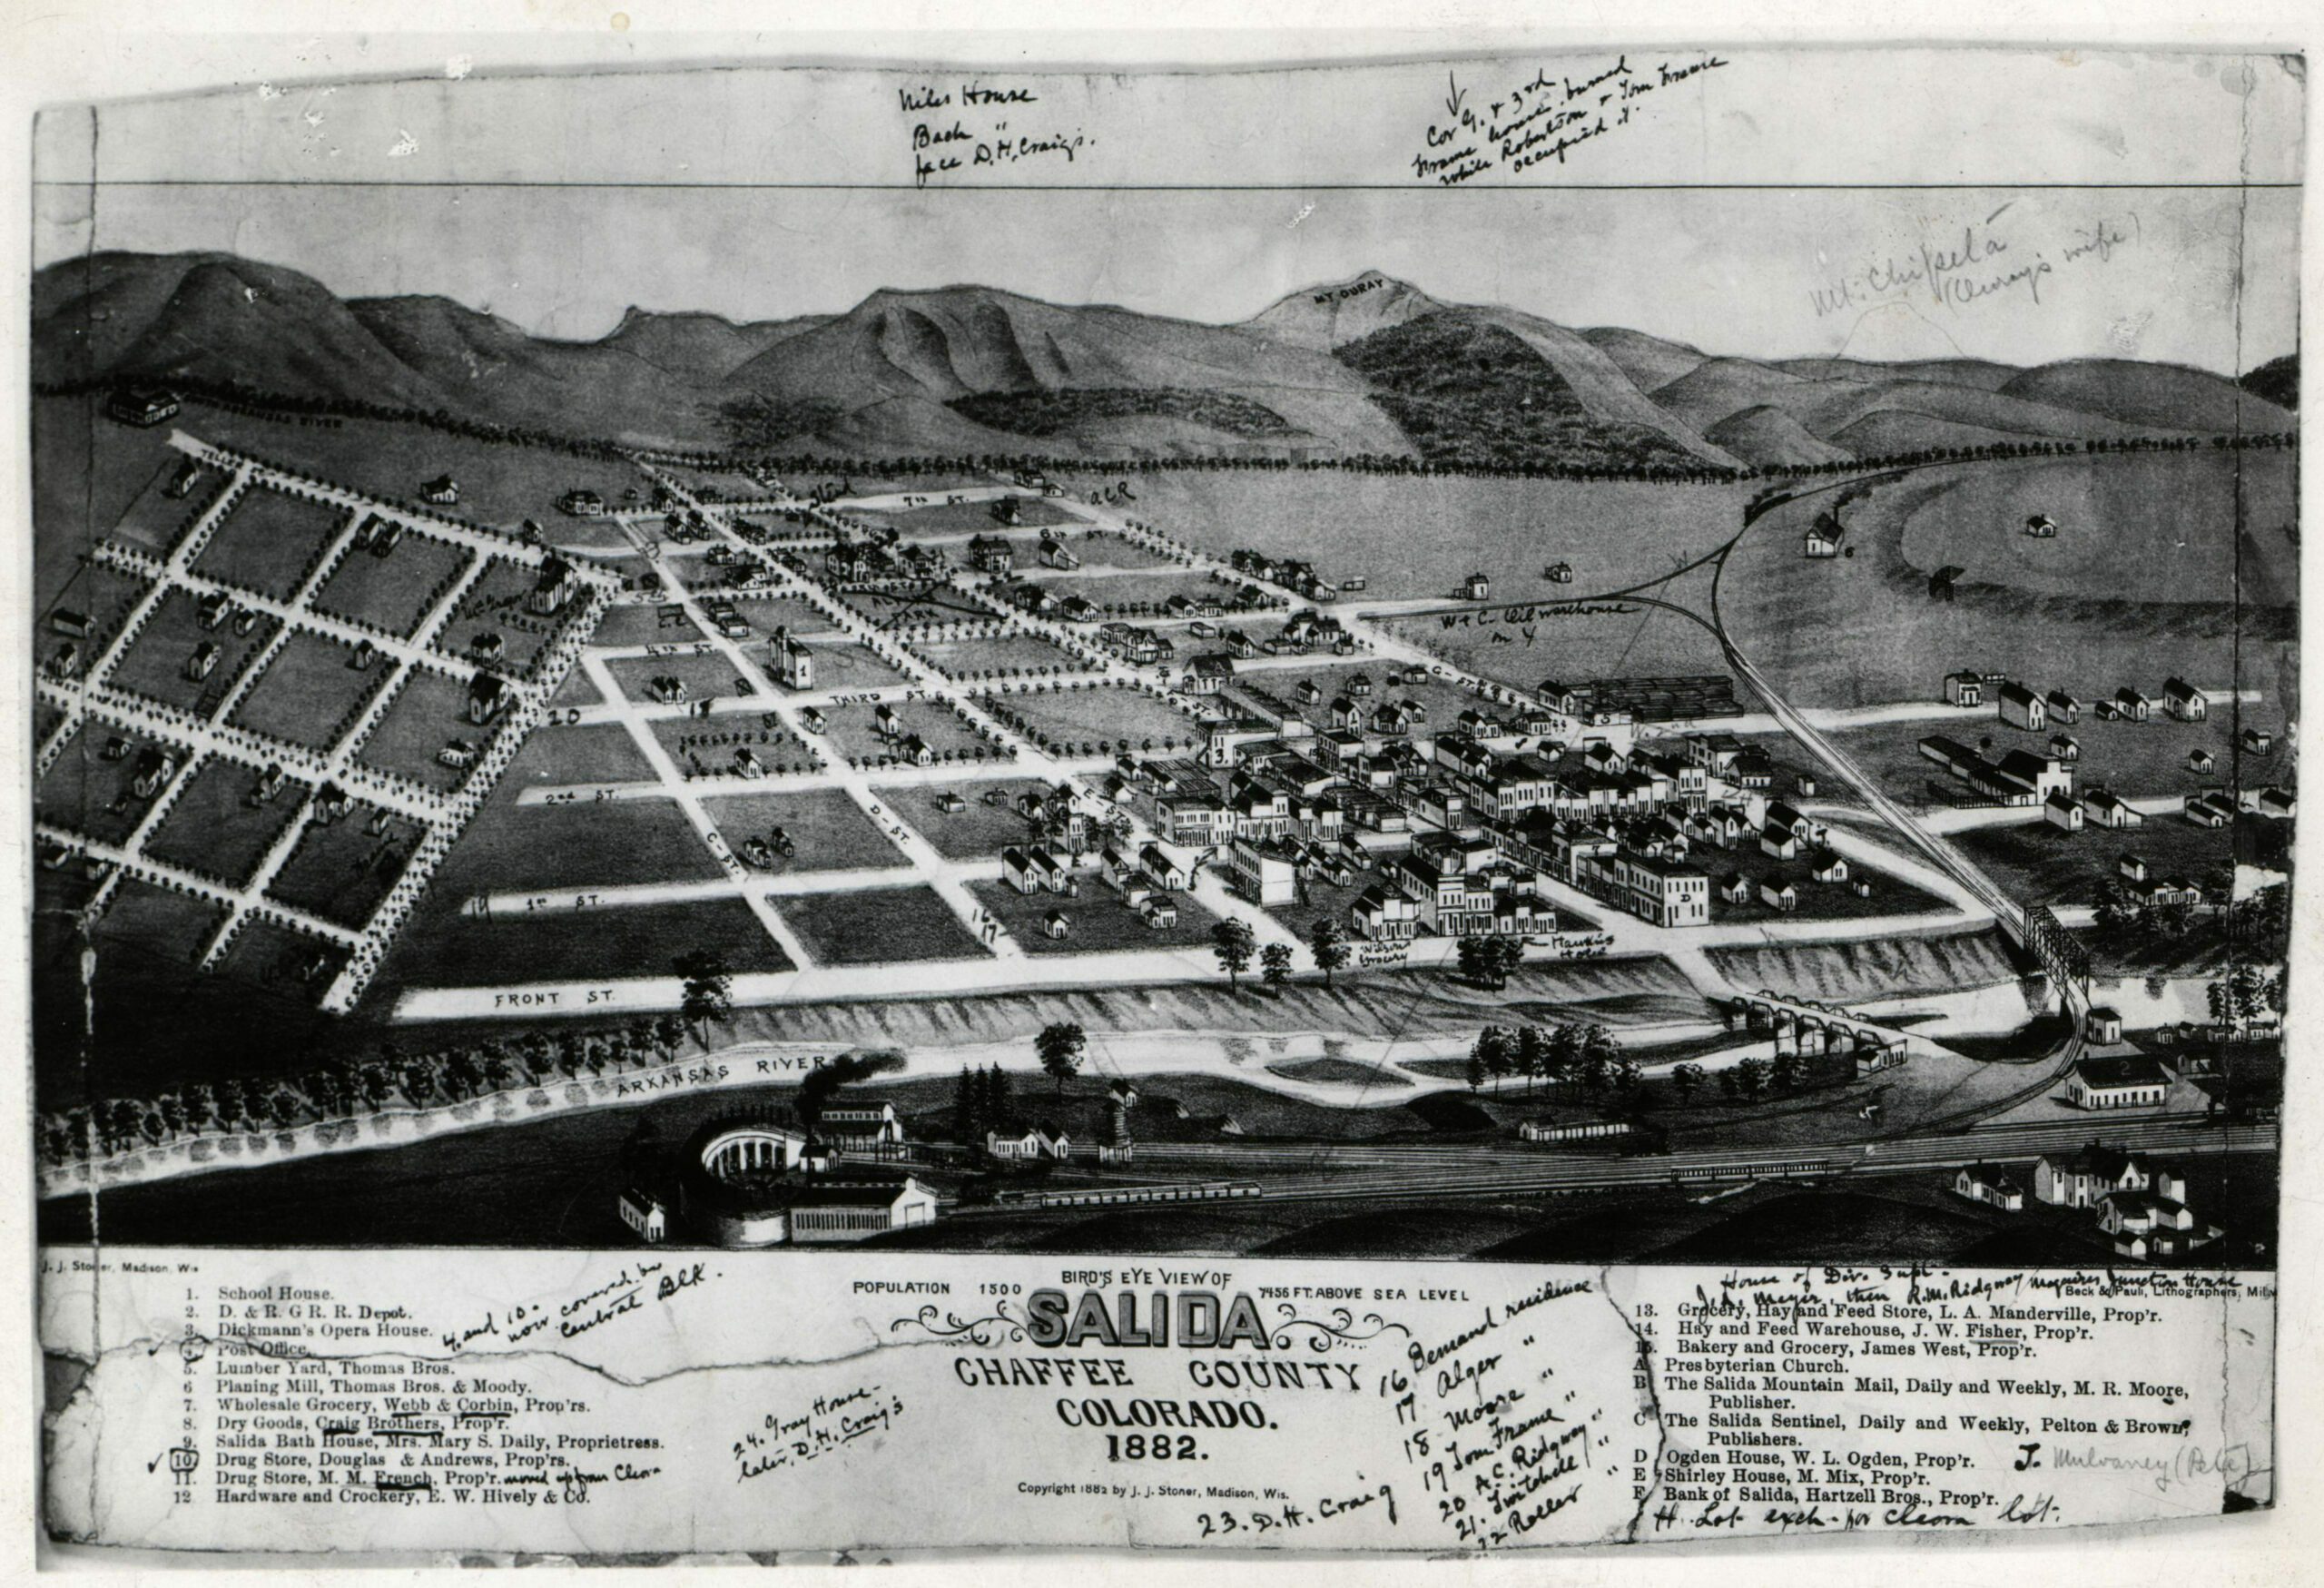 J.J. Stoner Map of Salida 1882 with Thomas Nevens notes